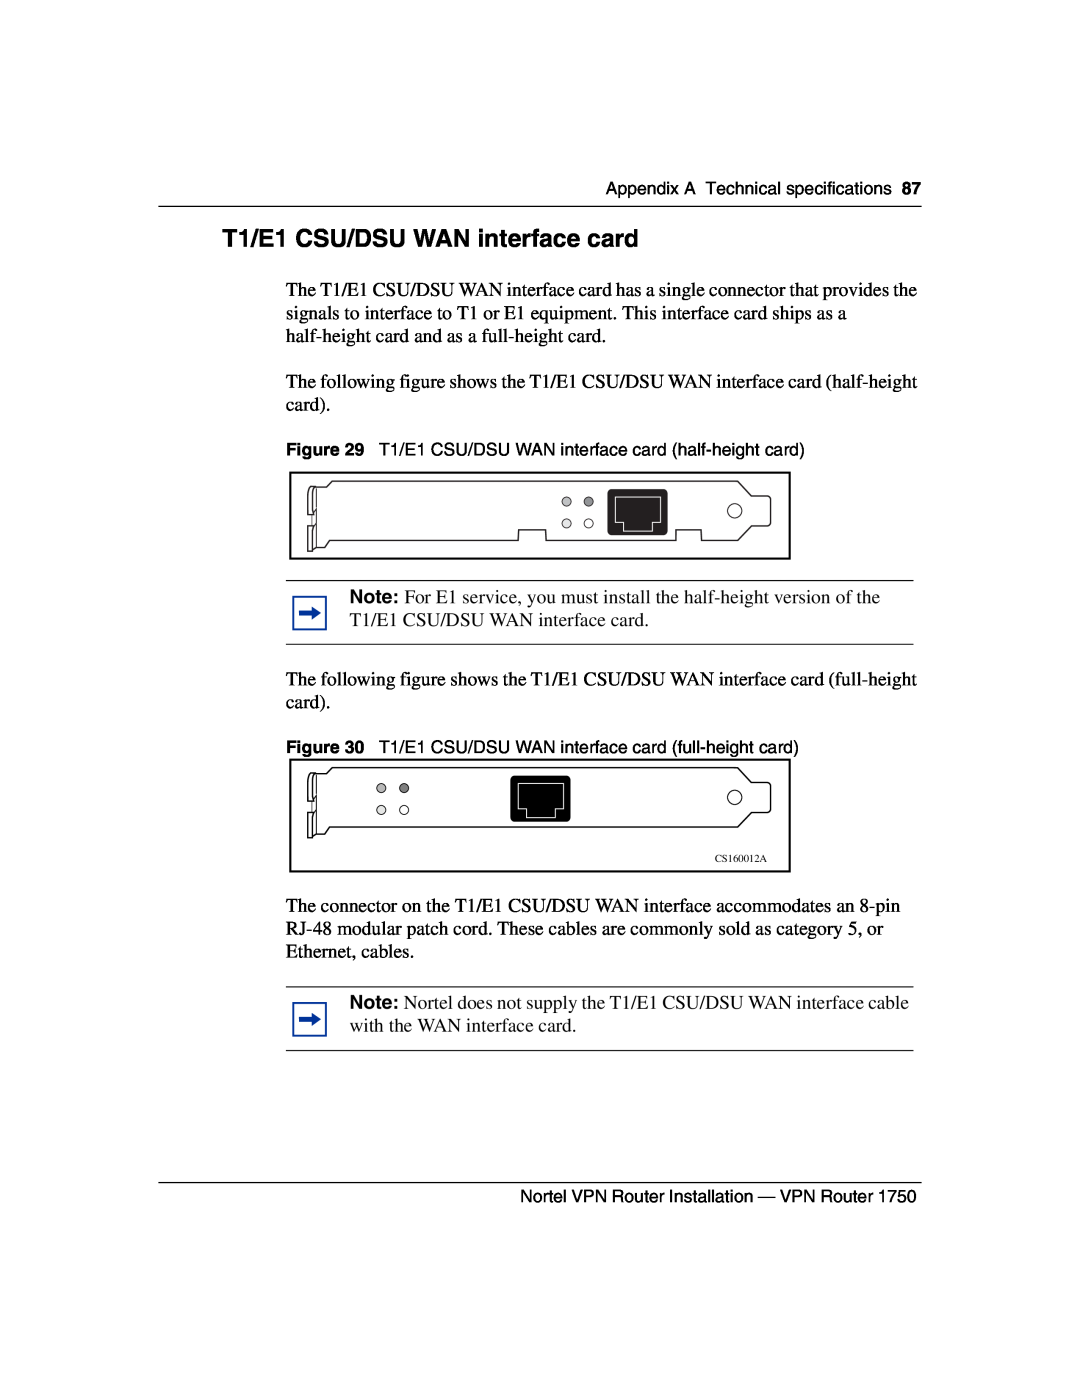 Nortel Networks 1750 manual T1/E1 CSU/DSU WAN interface card 